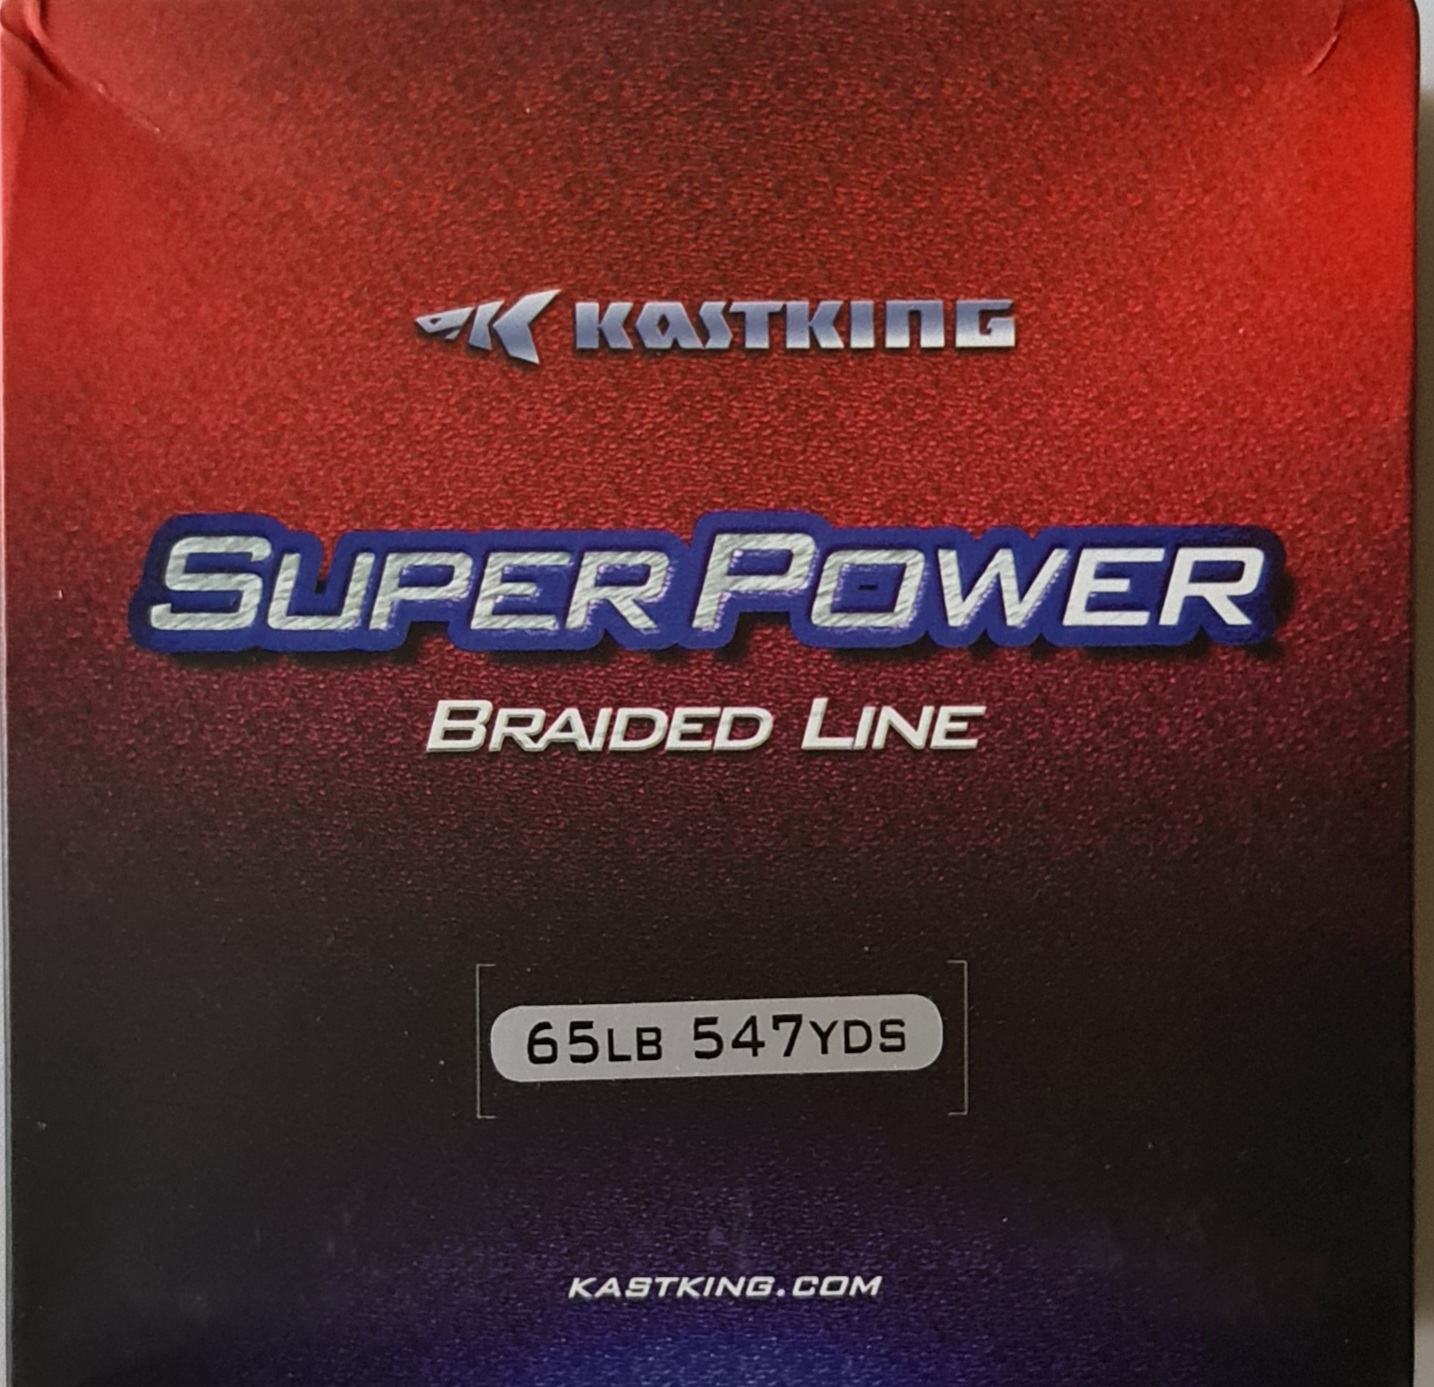 KastKing Super Power Braided Line 65lb 547yds